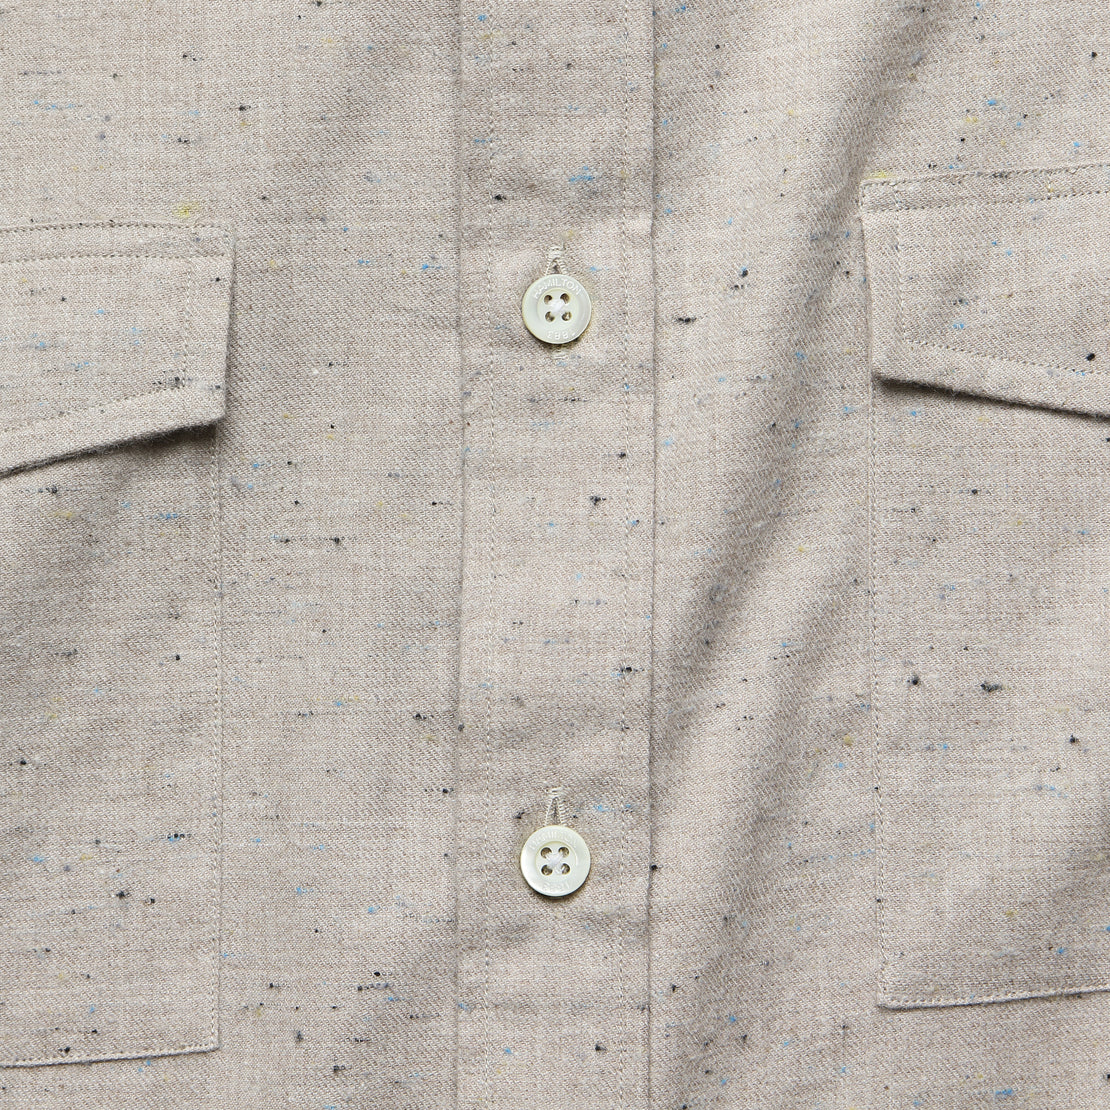 Twill Fleck Shirt - Tan - Hamilton Shirt Co. - STAG Provisions - Tops - L/S Woven - Fleck